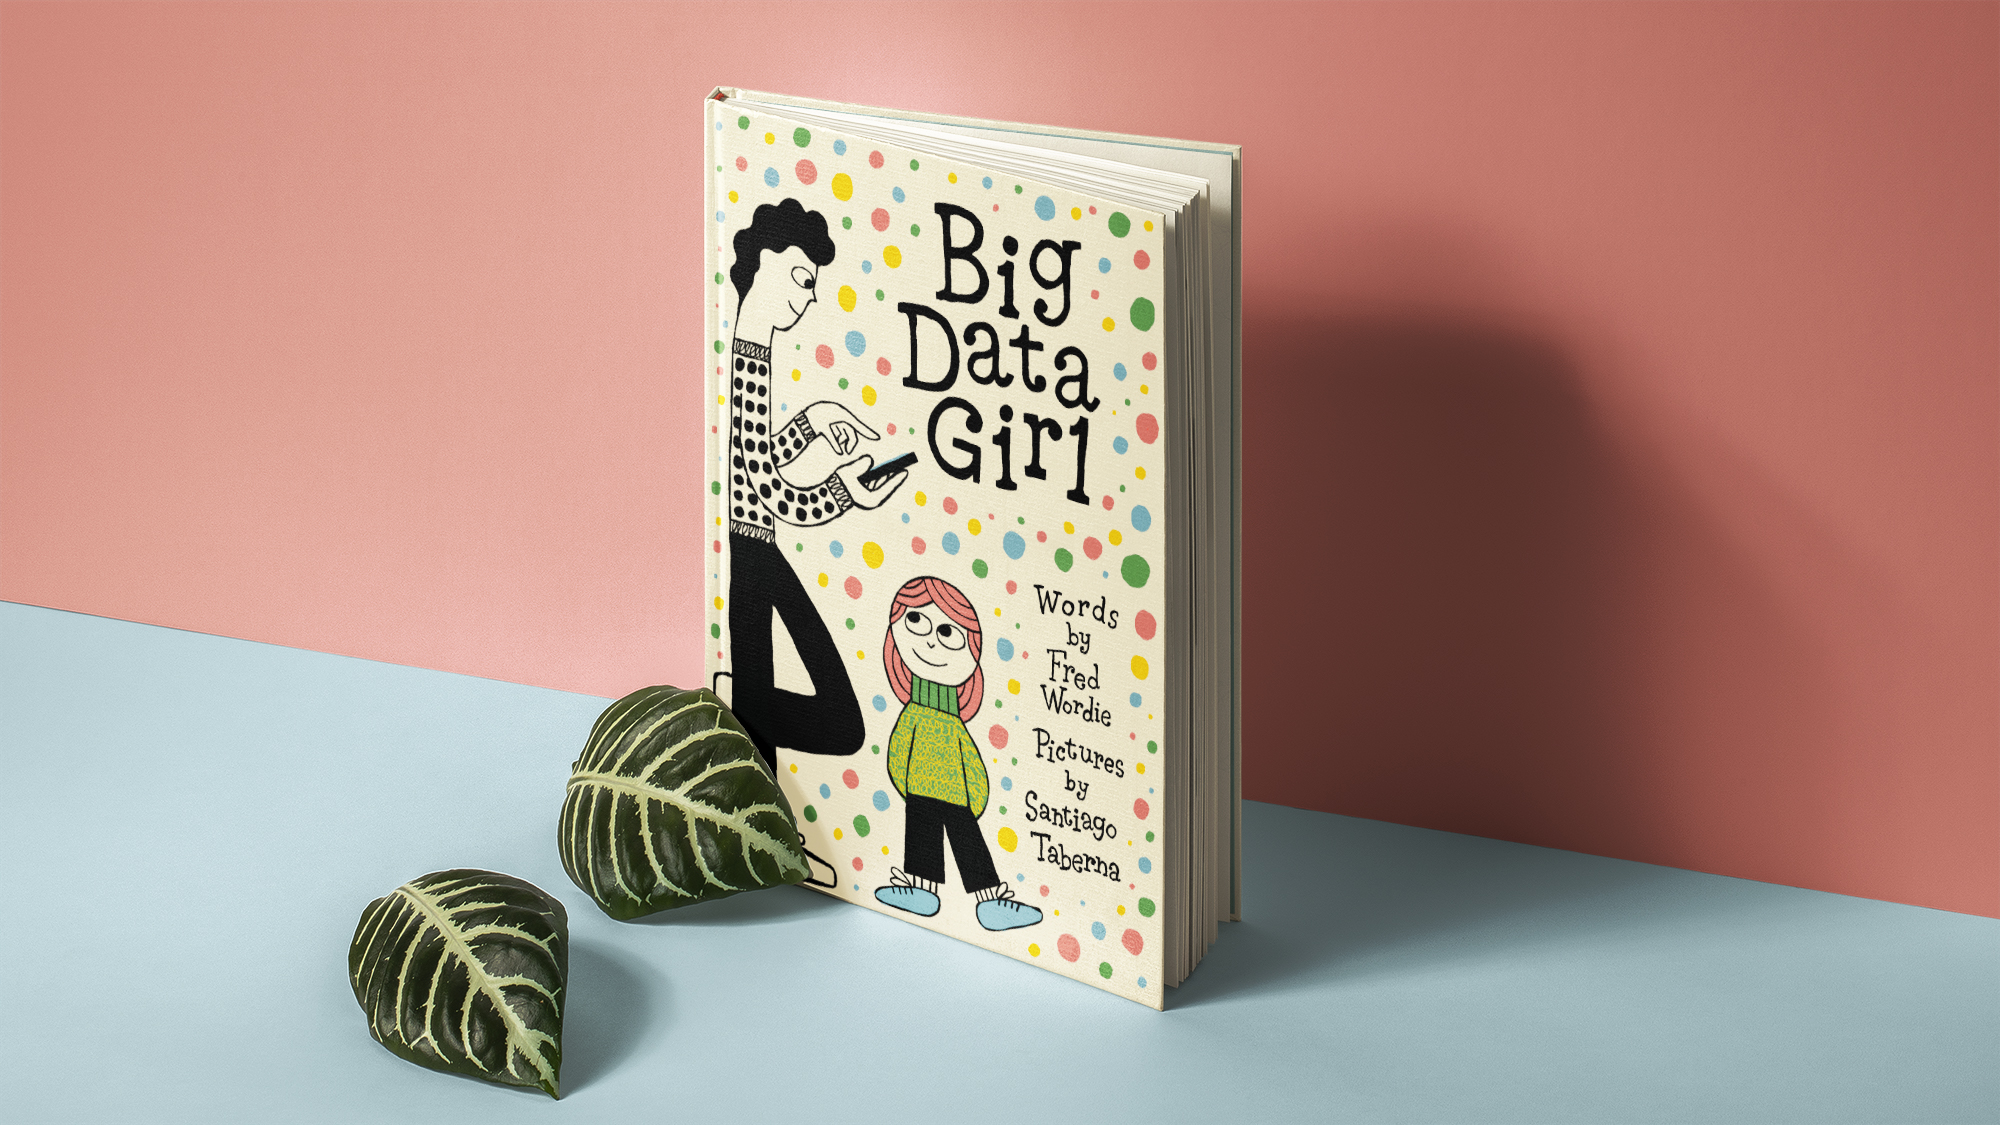 Kniha Freda Wordieho Big Data Girl (2021), ilustrácie Santiago Taberna.